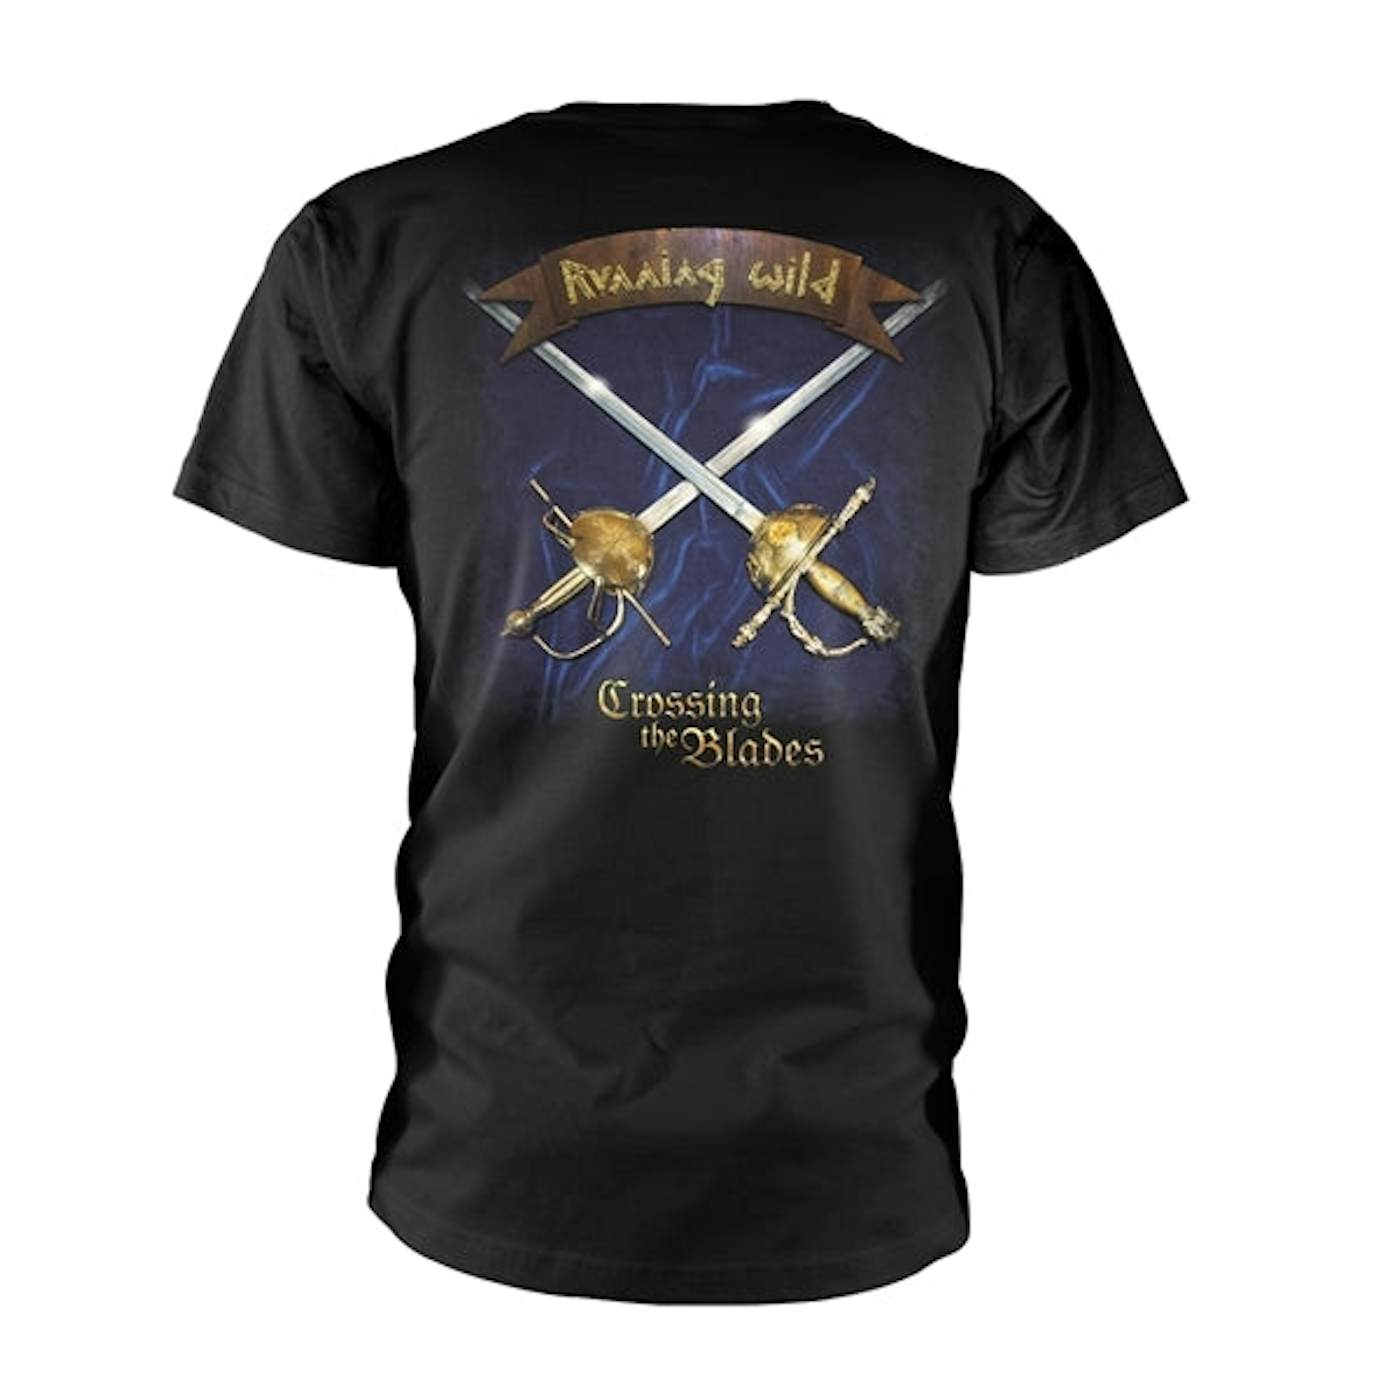 Running Wild T Shirt - Crossing The Blades